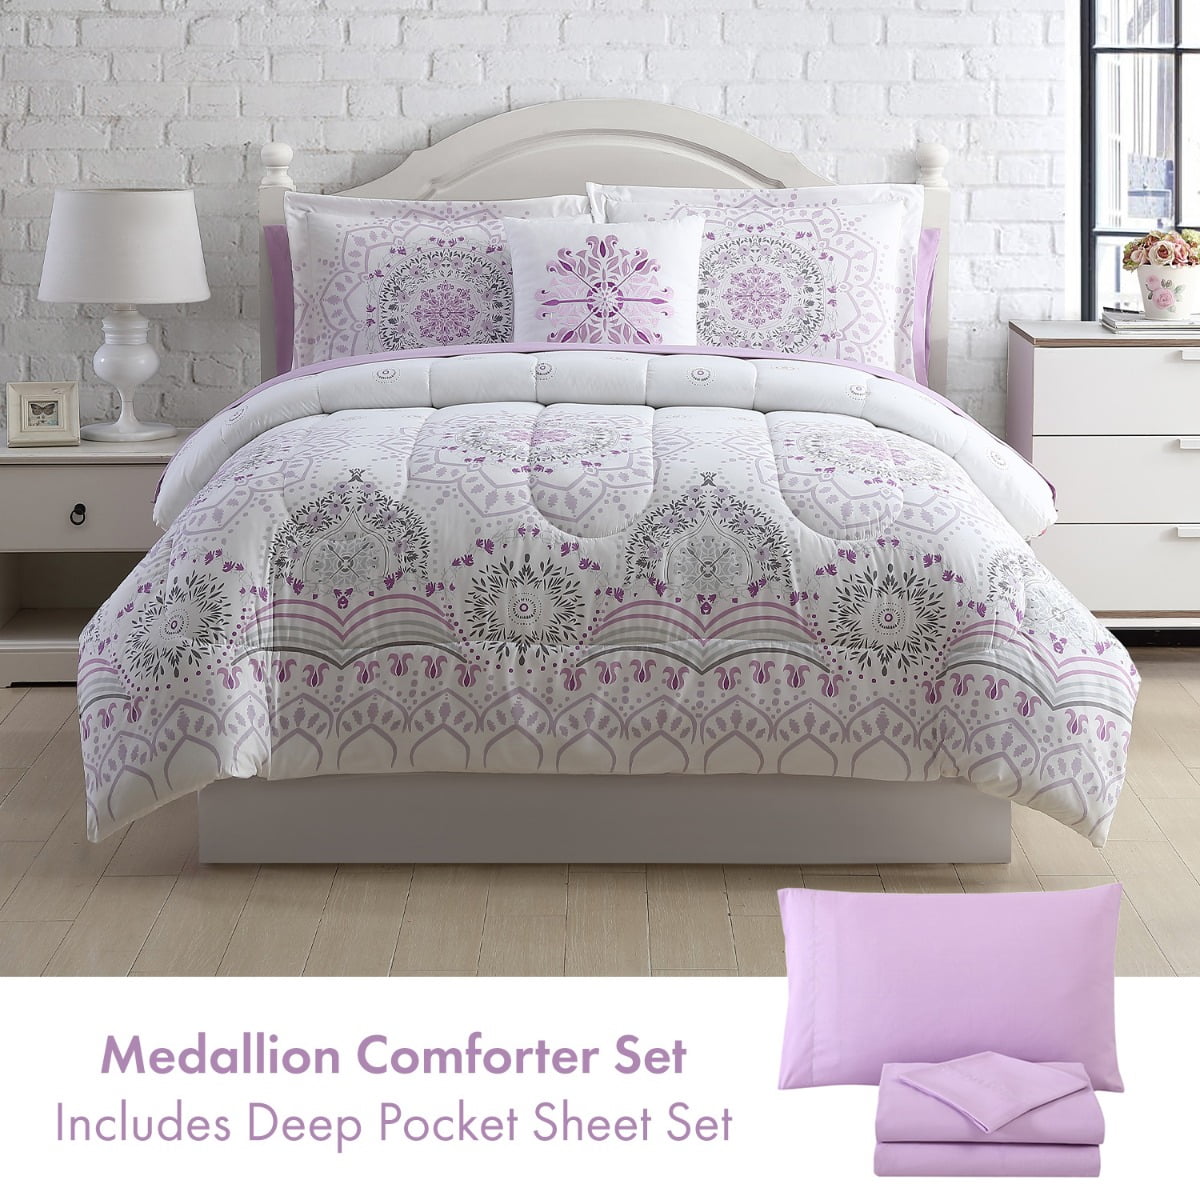 This 6-piece twin size set includes a comforter, pillow sham, decorative pi...